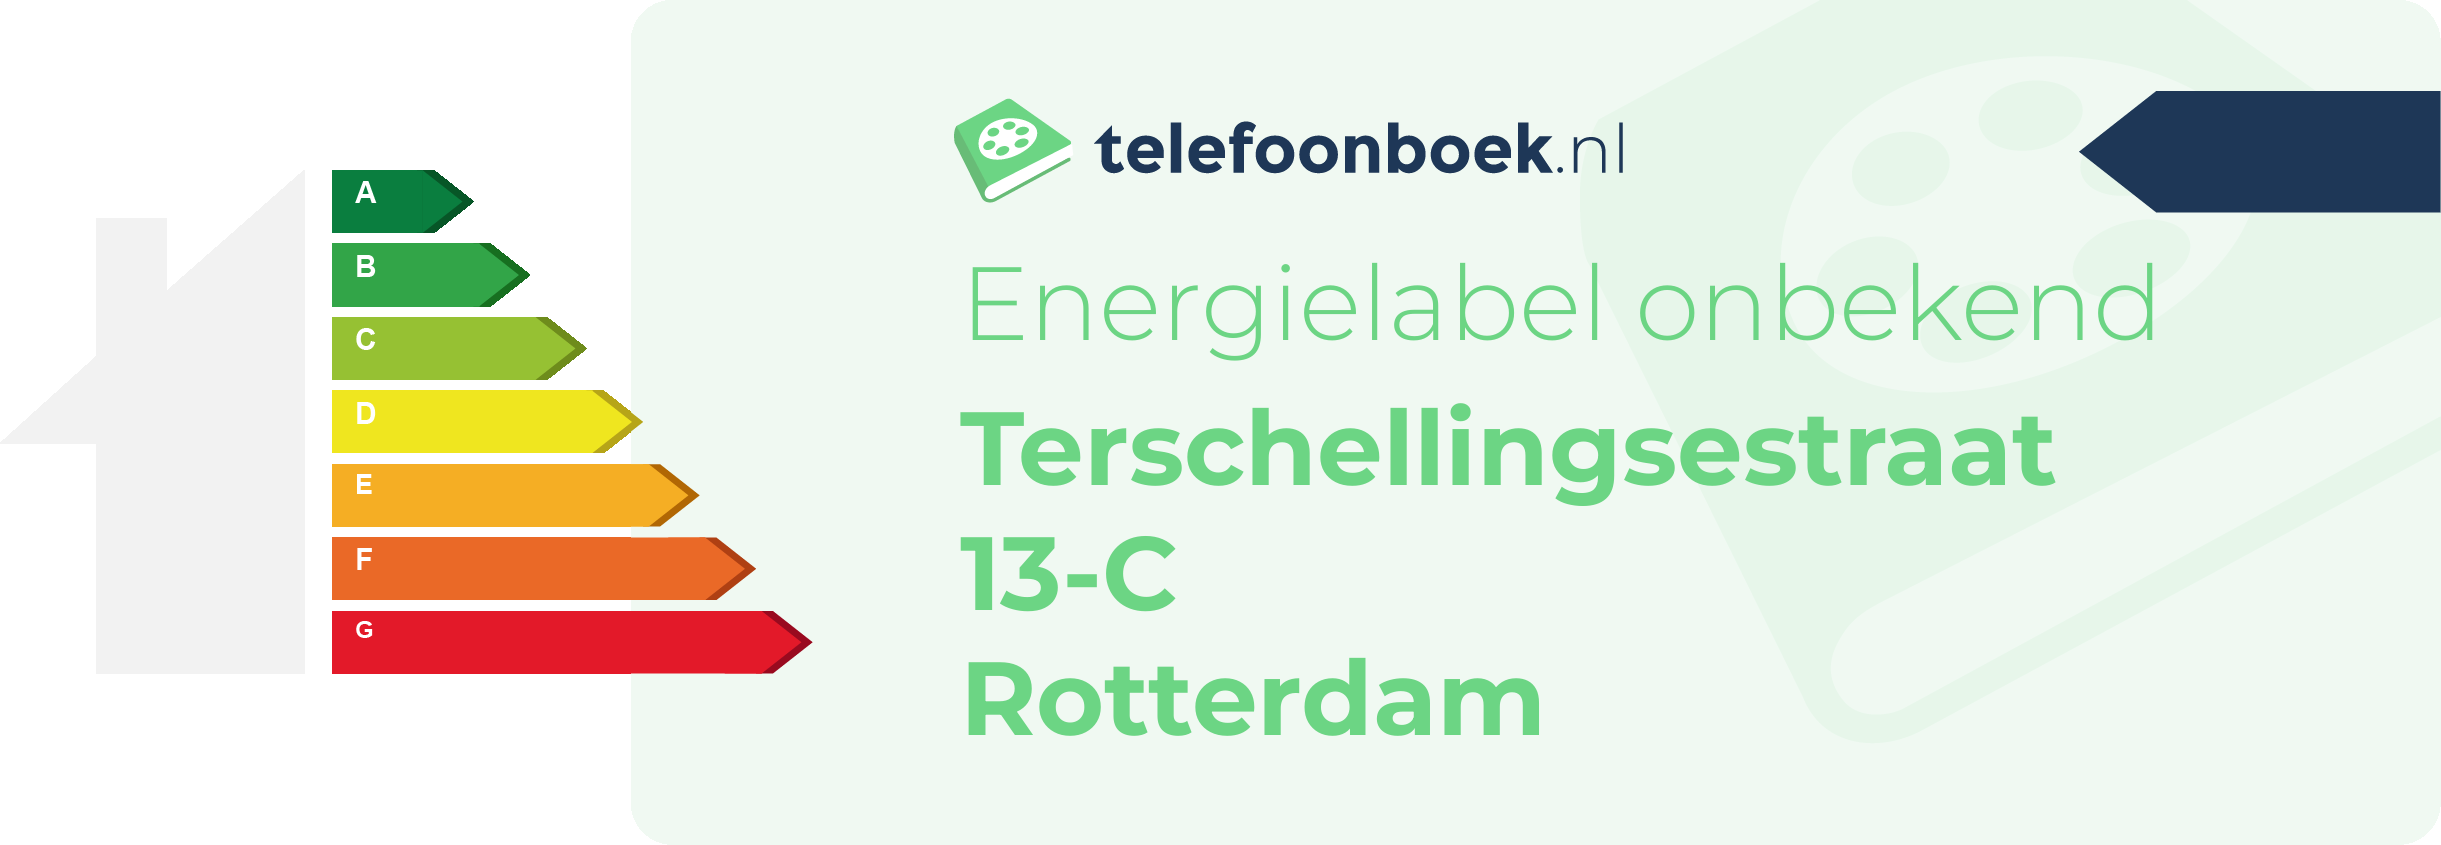 Energielabel Terschellingsestraat 13-C Rotterdam